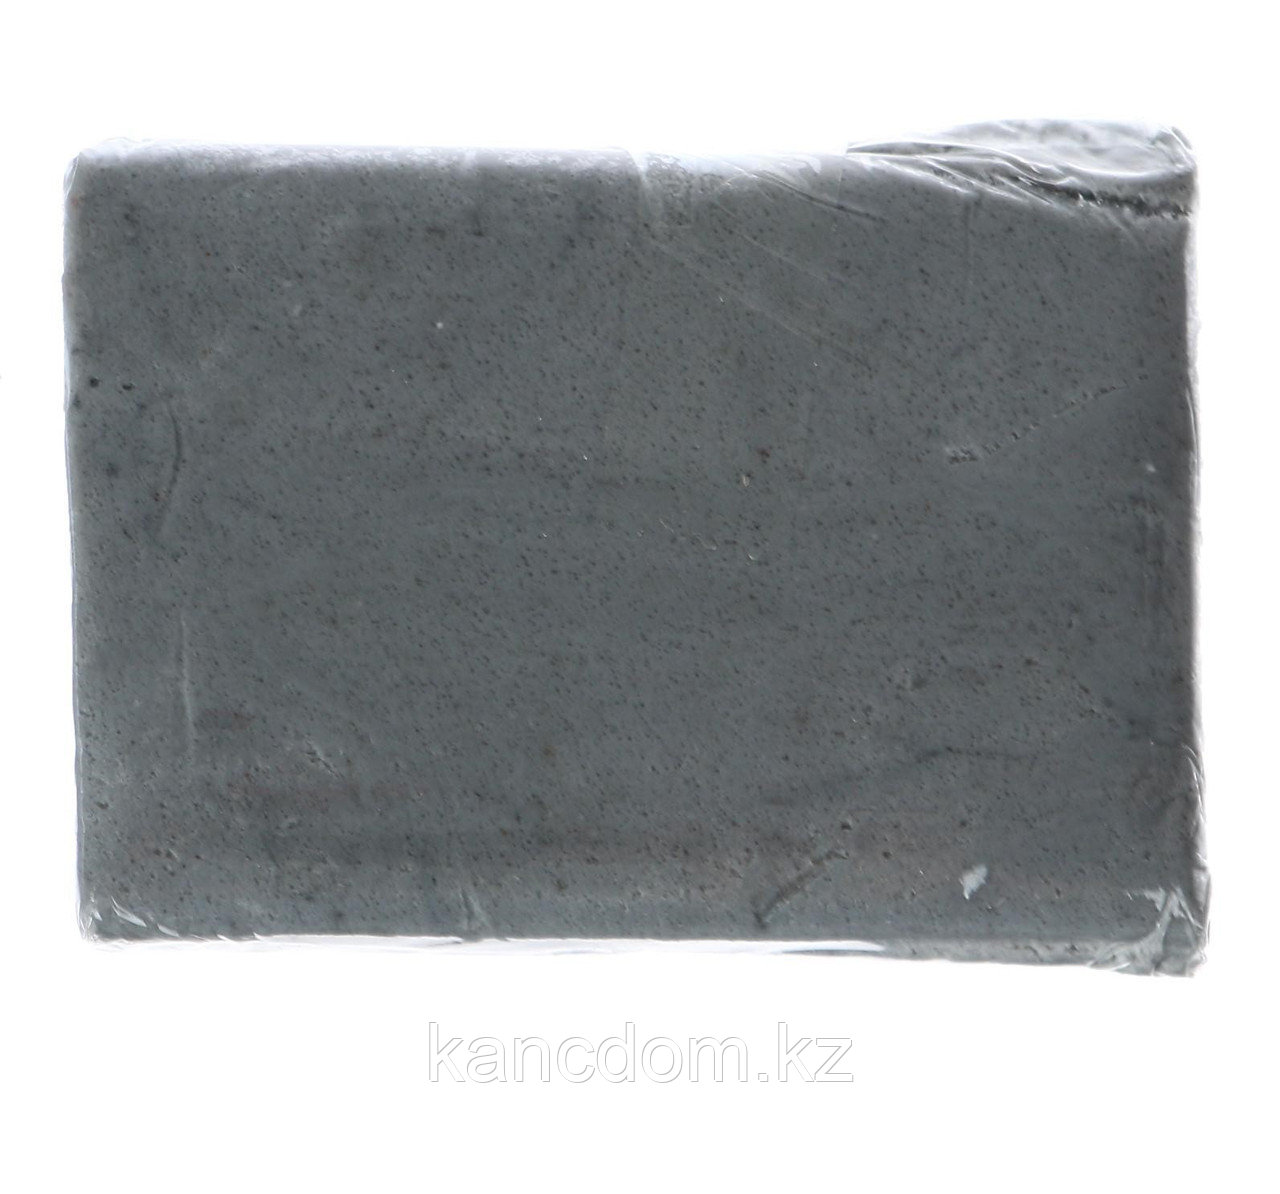 Ластик-клячка для растушевки ЗХК «Сонет», 45 х 32 х 8 мм, серый